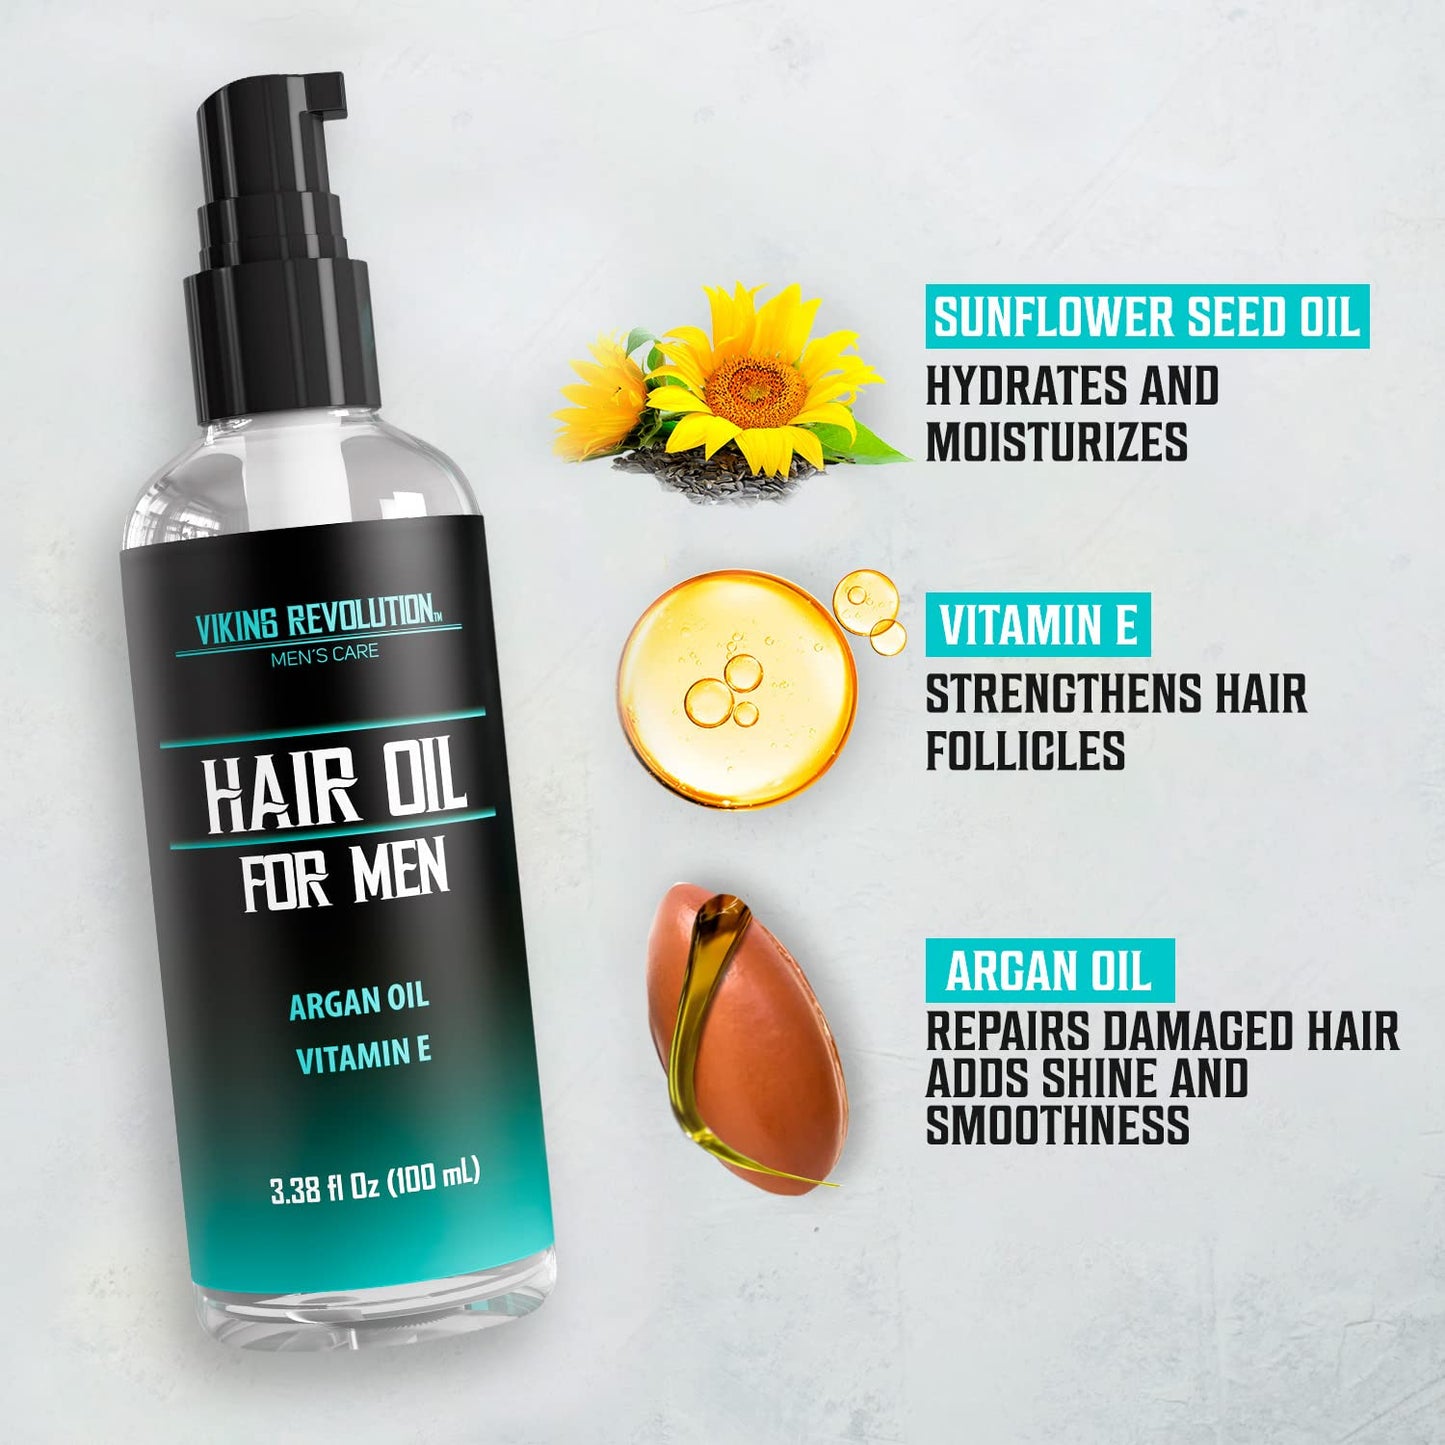 Viking Revolution Hydrating Hair Oil for Men - Mens Hair Oil Men with Vitamin E Dry Hair Oils with Argan Oil - Sunflower Seed Oil Hair Serum Repair, Hidrate Hair Treatment Oils (3.38 fl Oz)